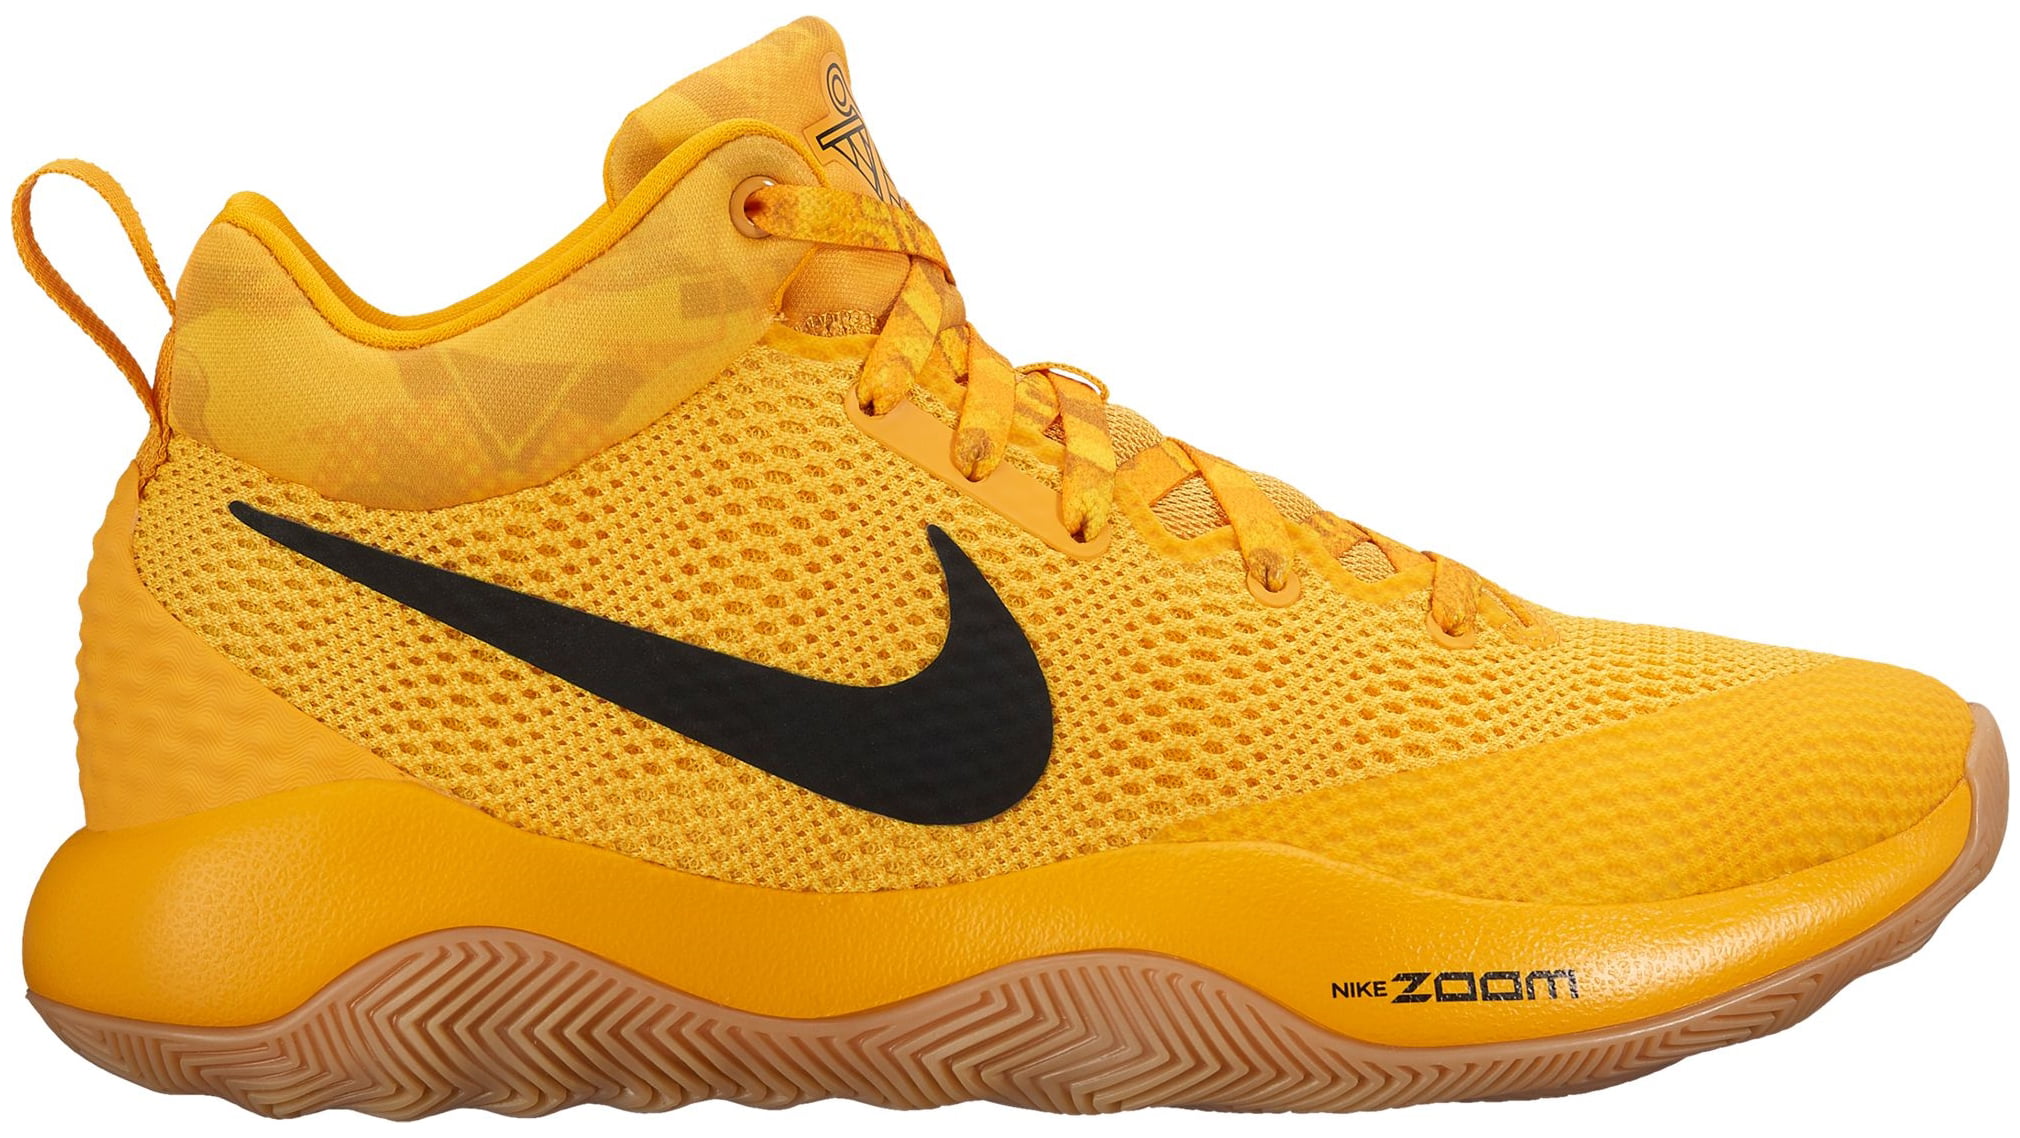 Nike Men's Zoom Rev 2017 Basketball Shoes - Yellow/Black 8.5 - Walmart.com